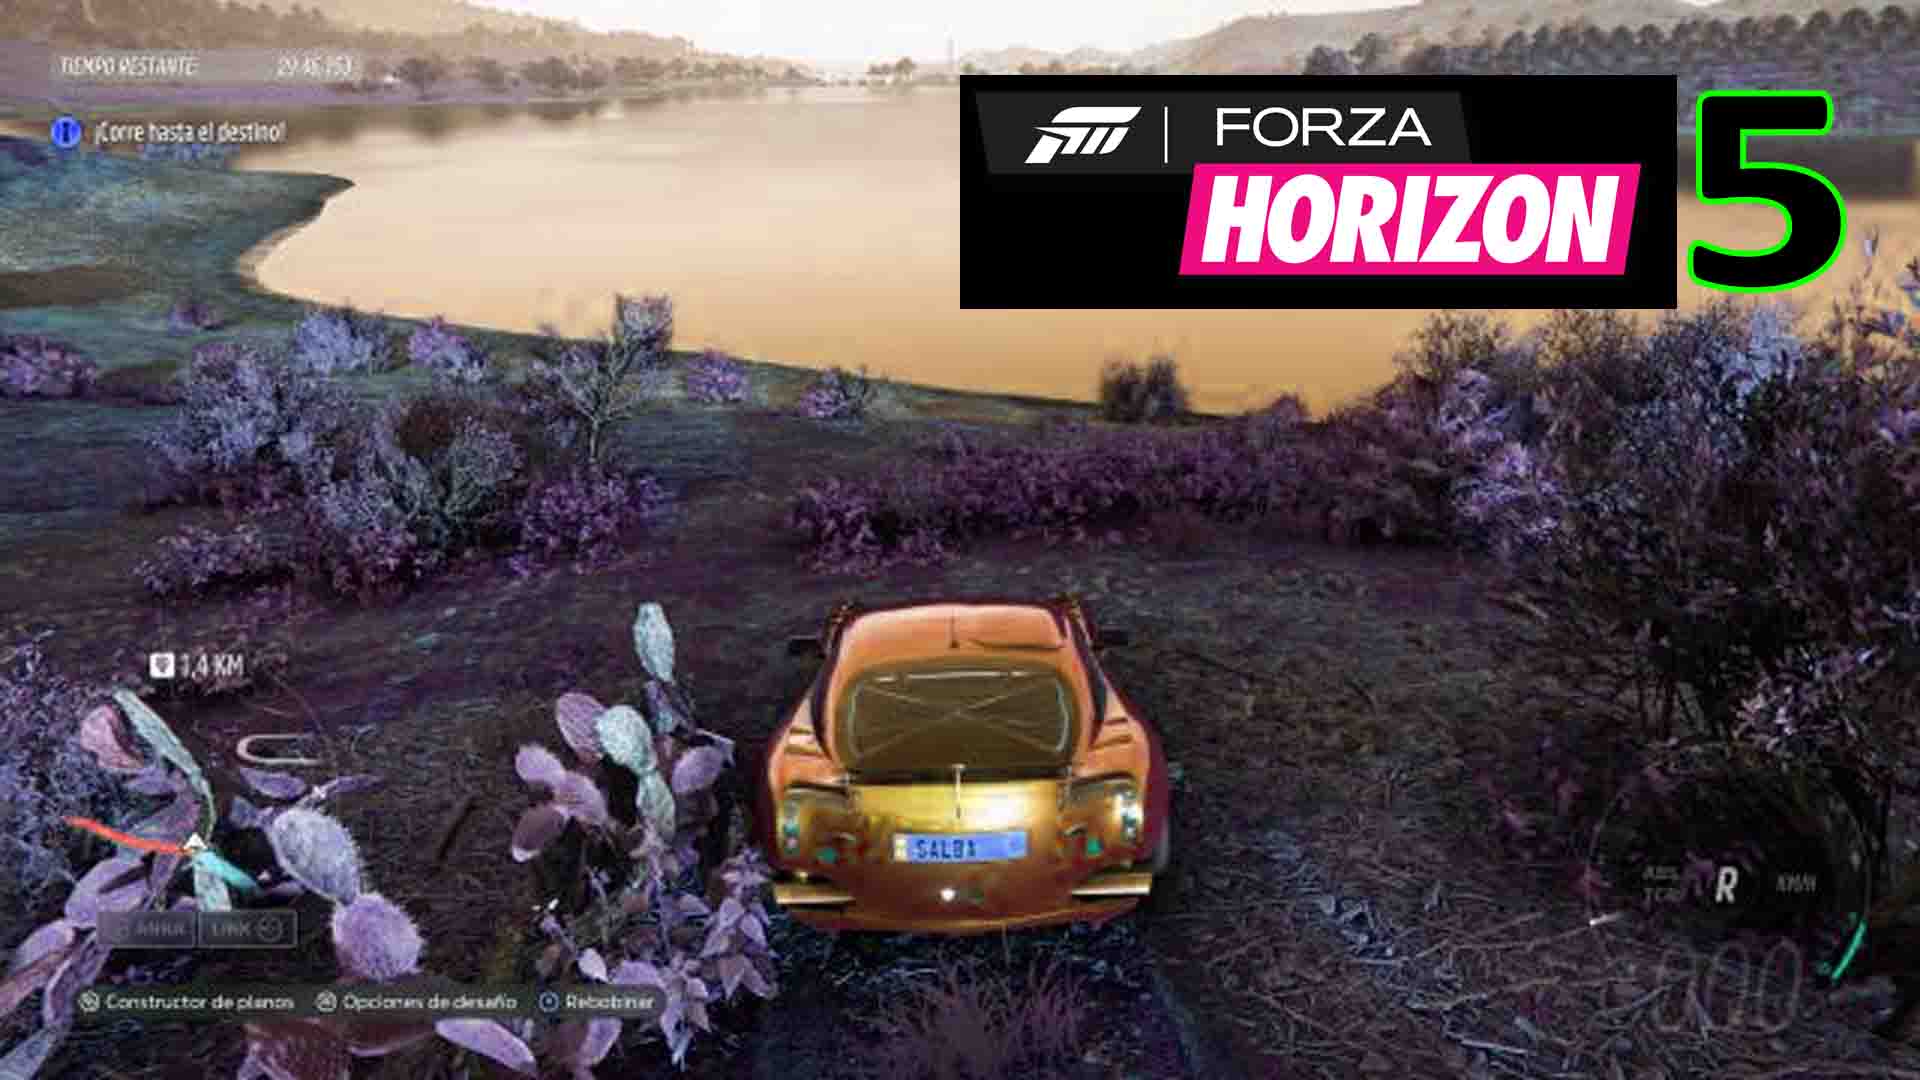 forza horizon 5 release date